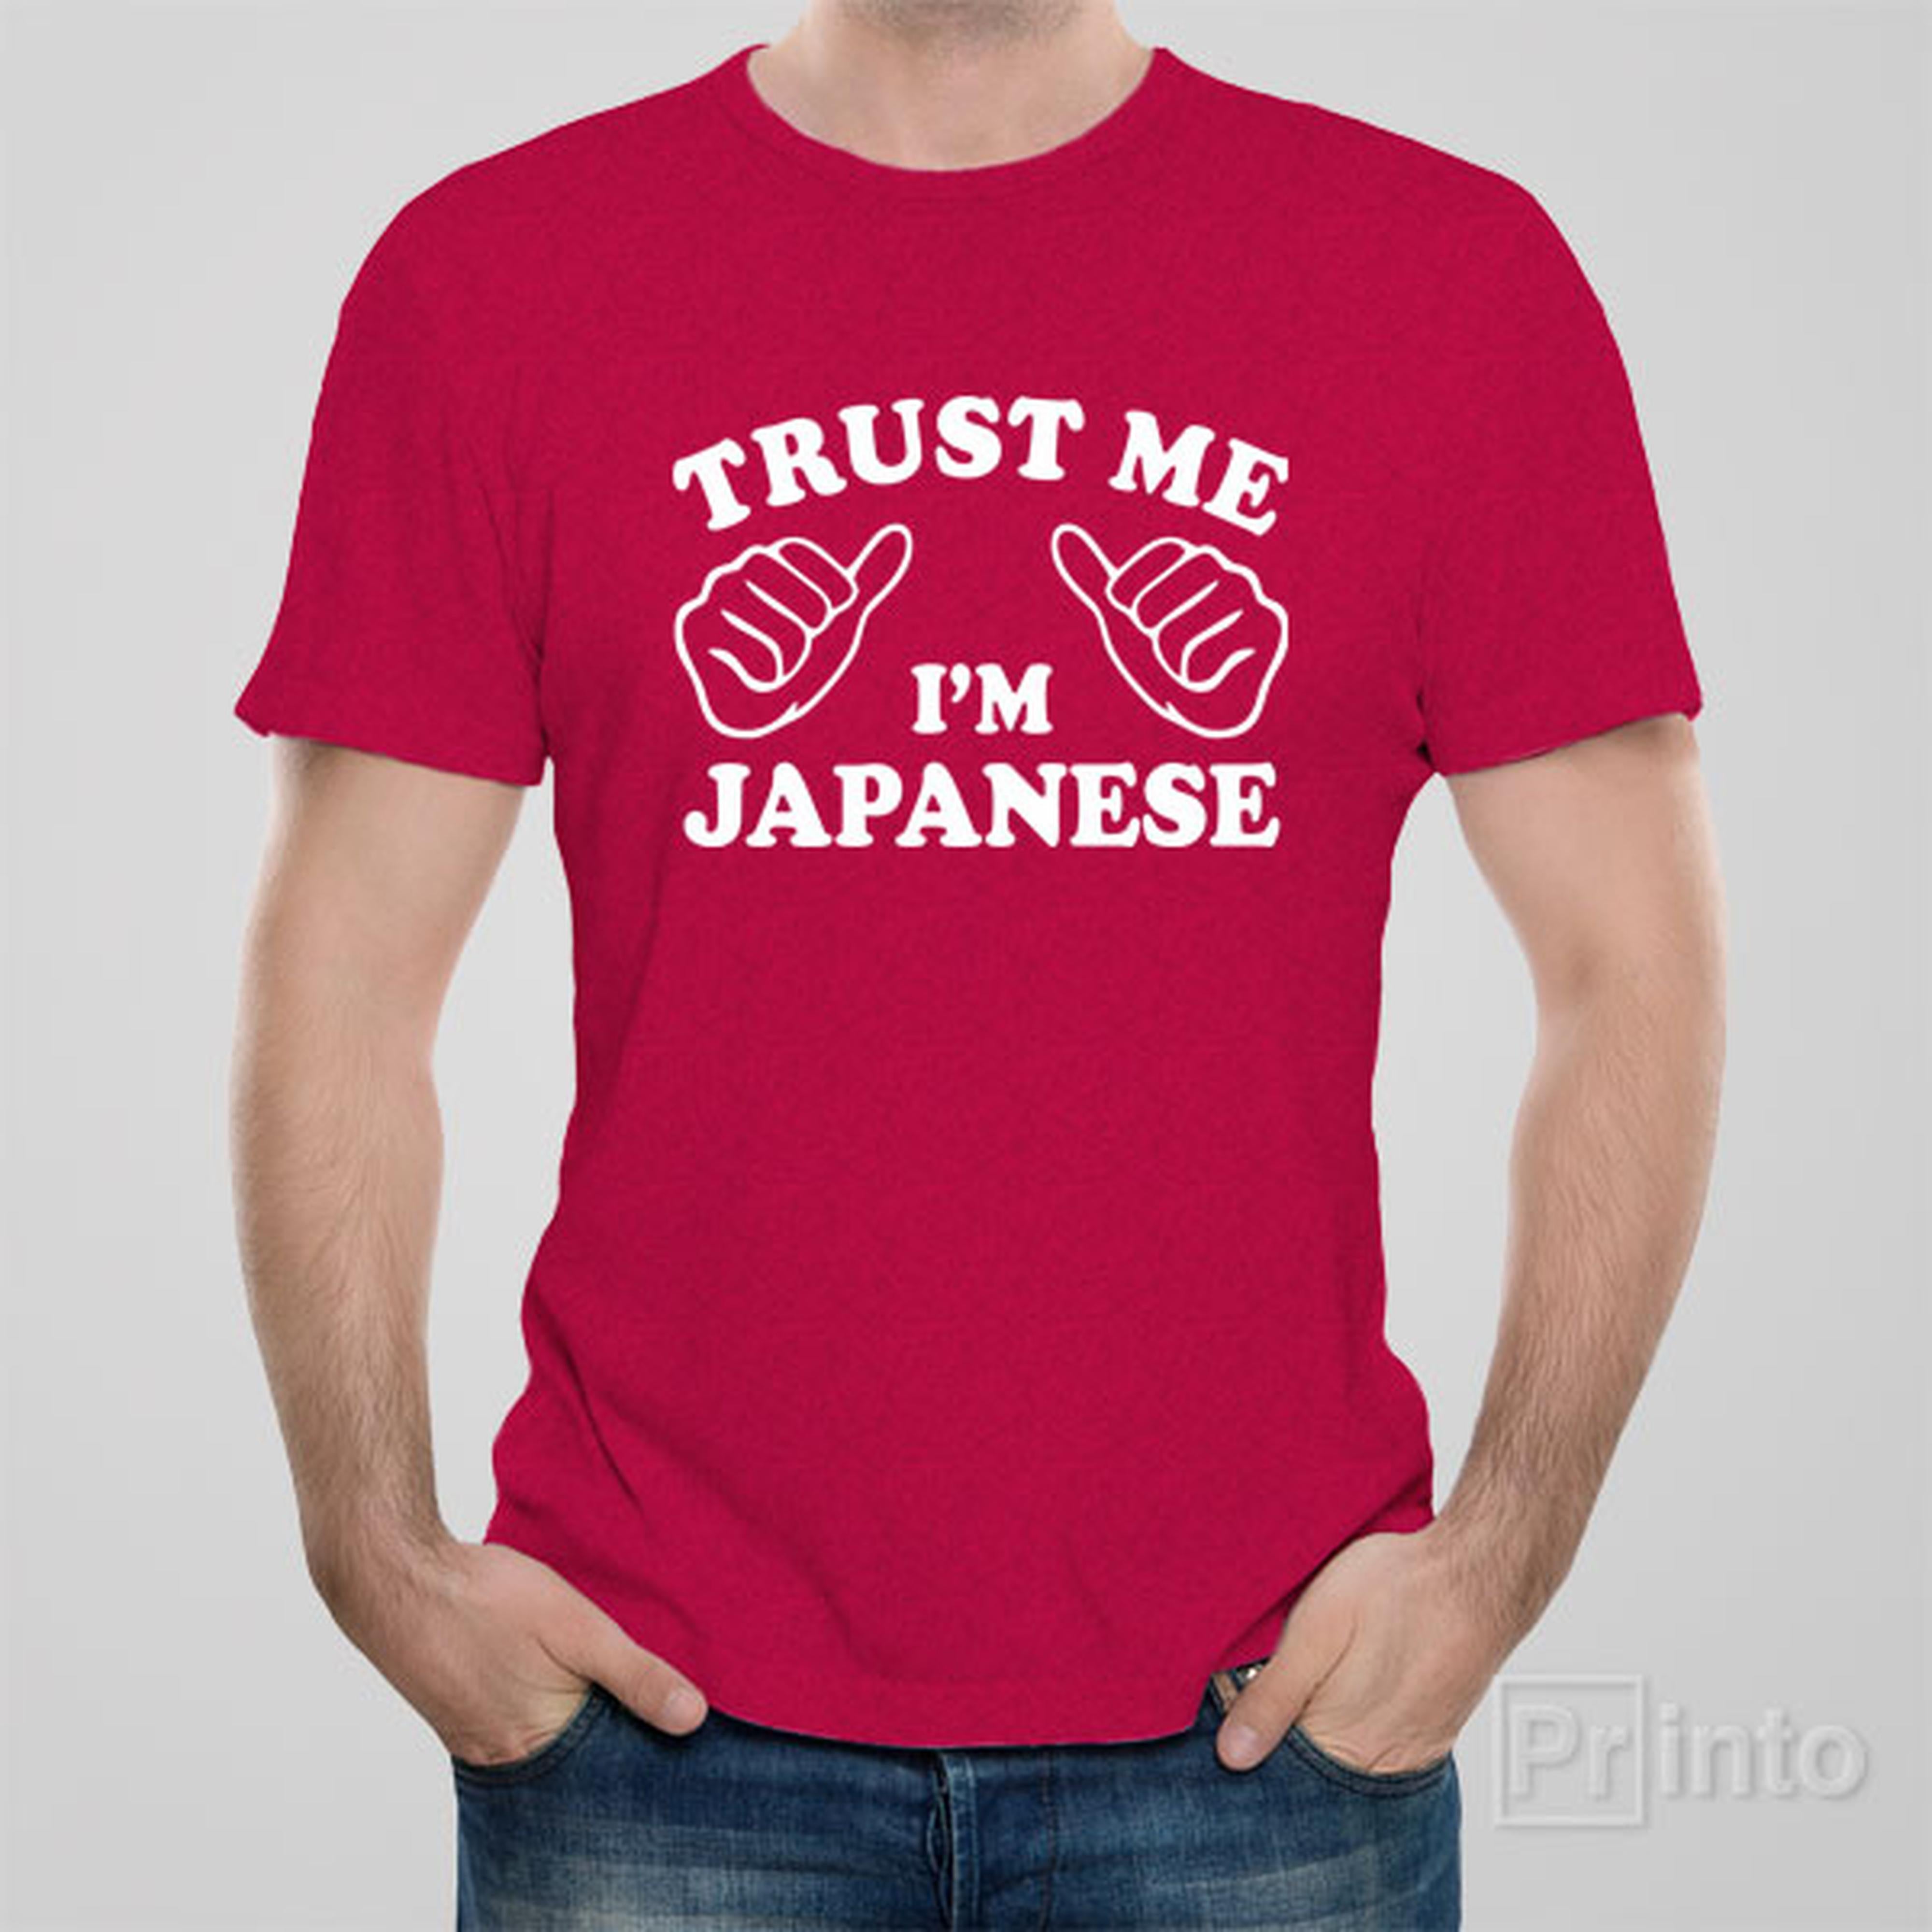 trust-me-i-am-japanese-t-shirt